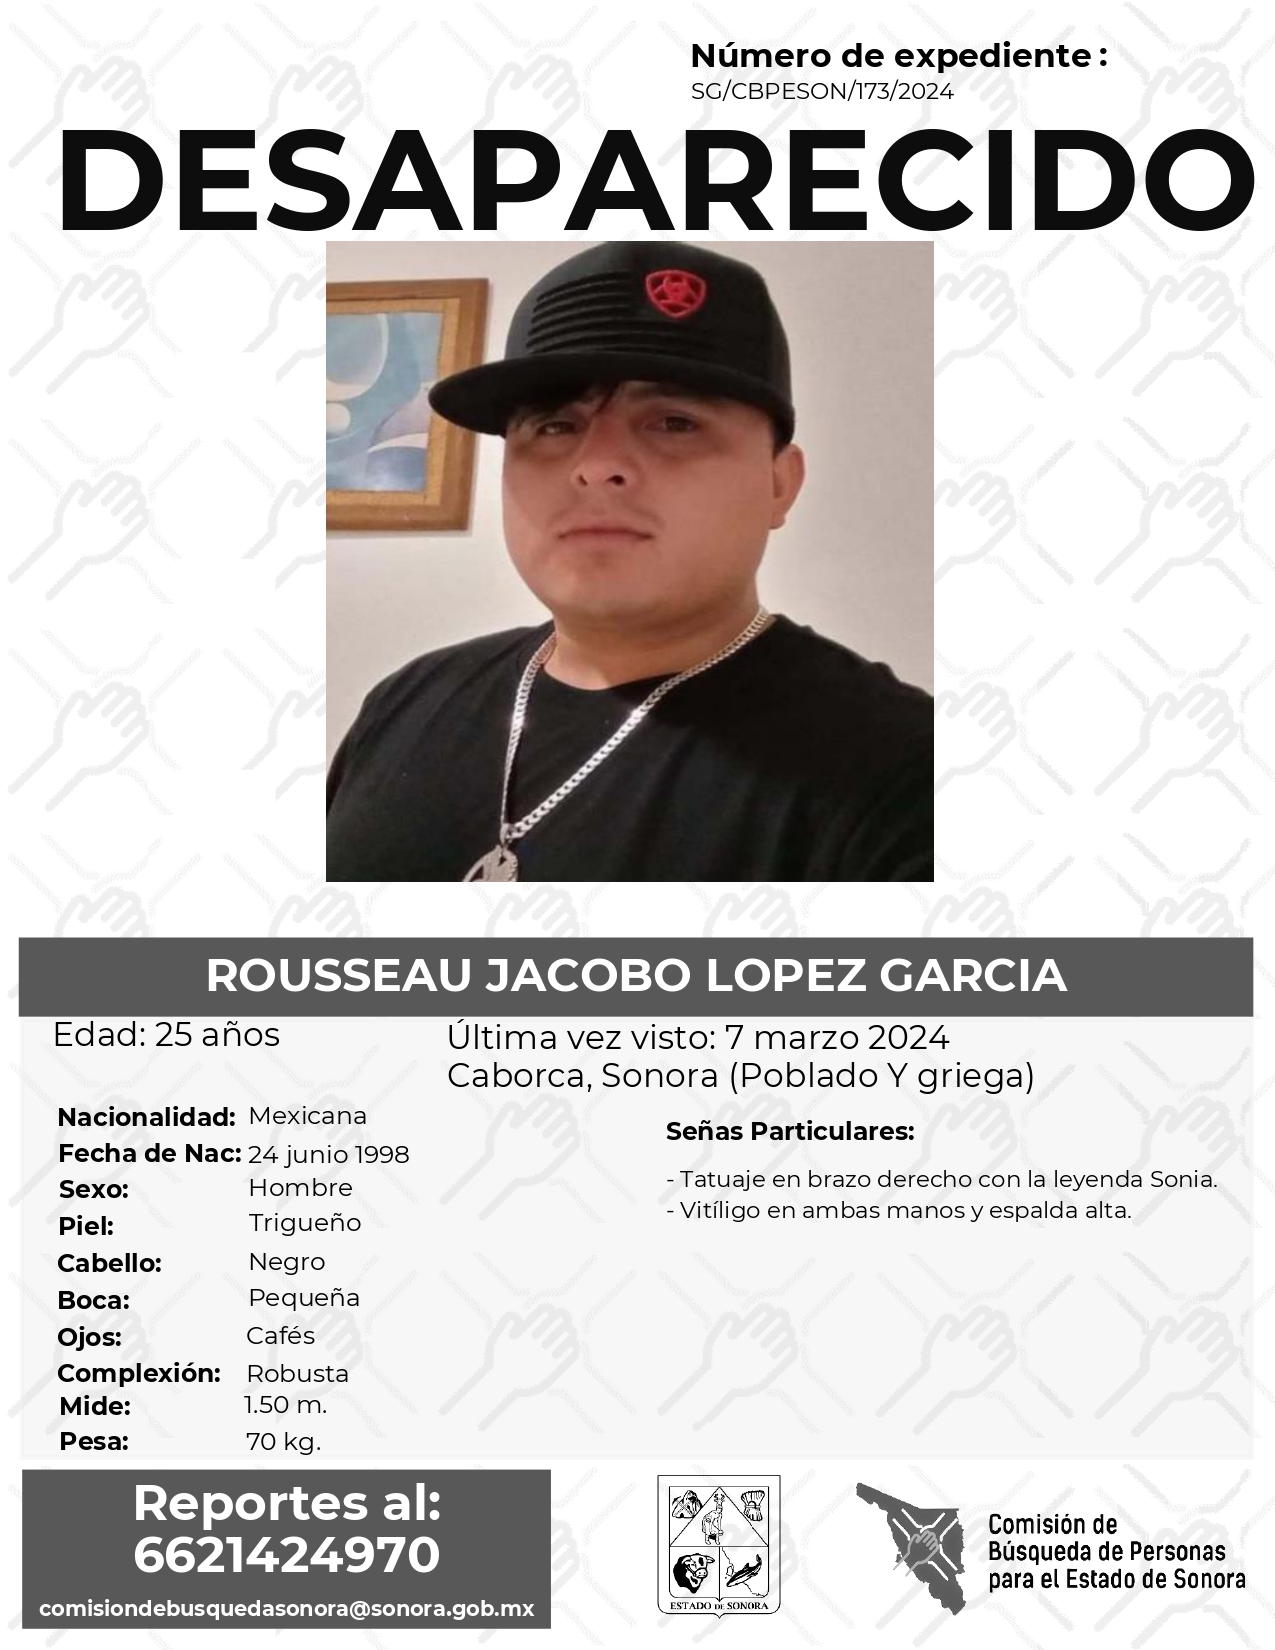 ROUSSEAU JACOBO LOPEZ GARCIA - DESAPARECIDO